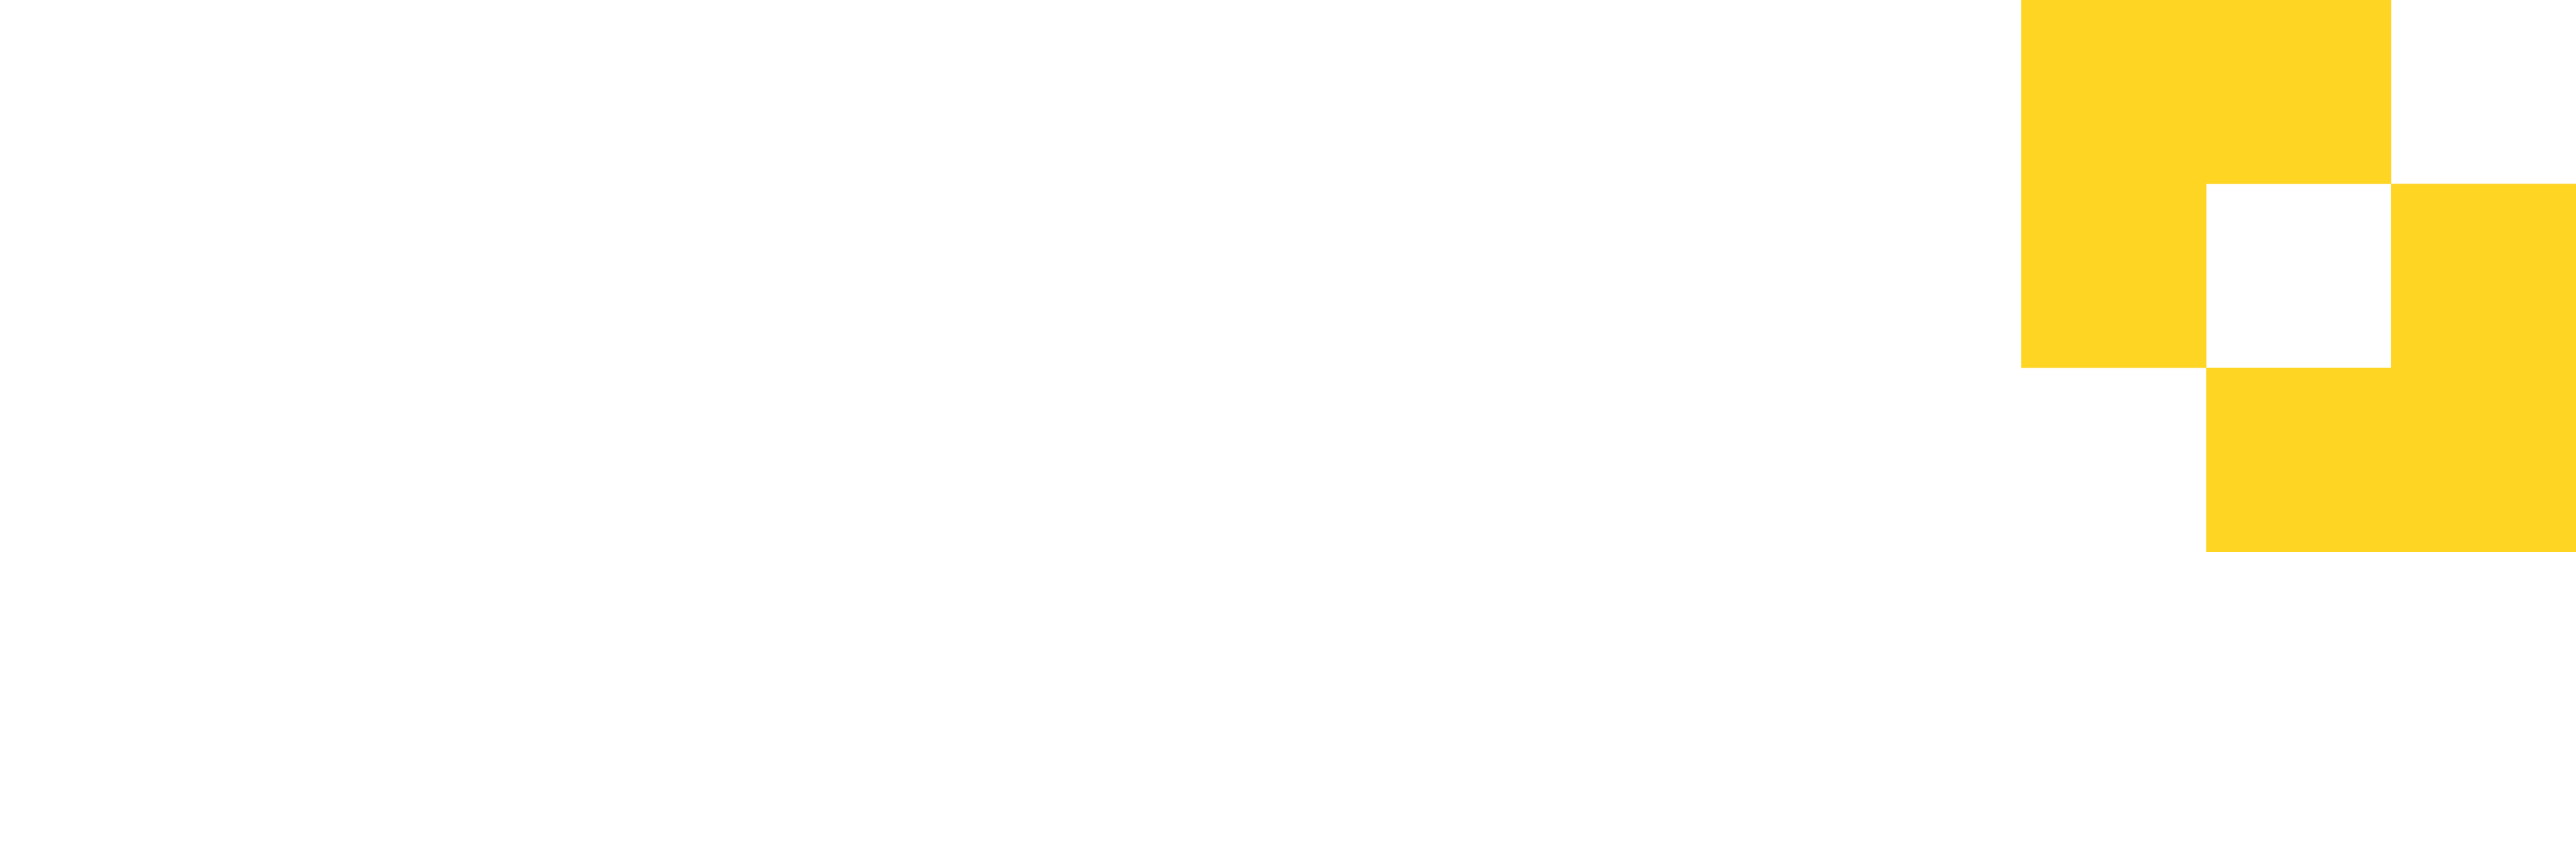 Modulr logo